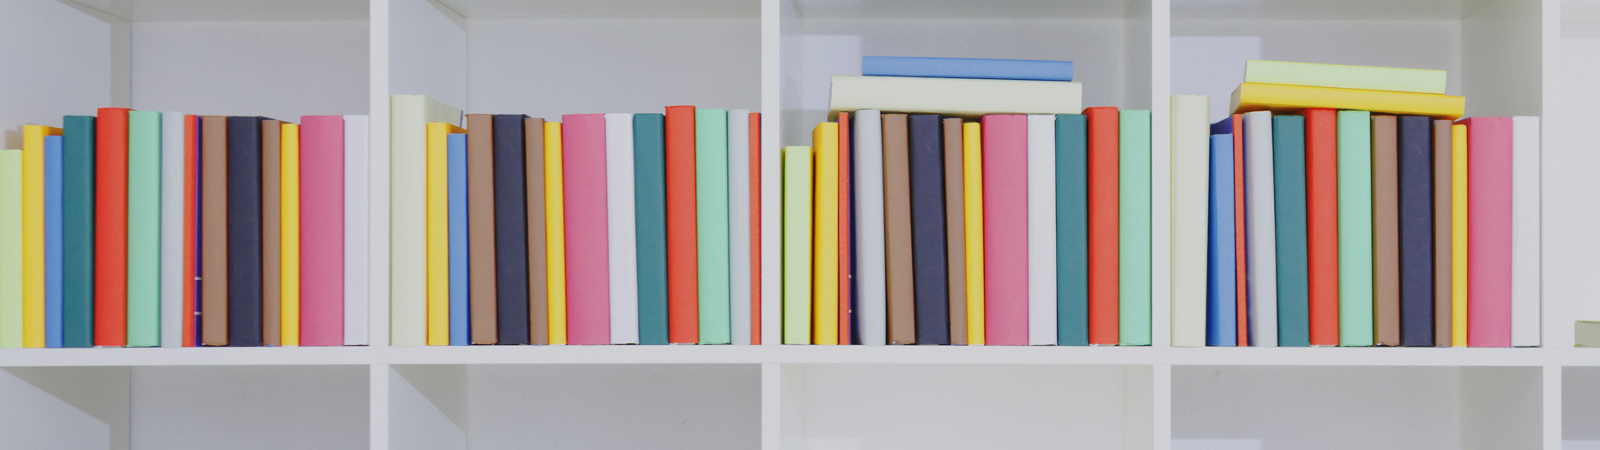 bookshelf with colourful books